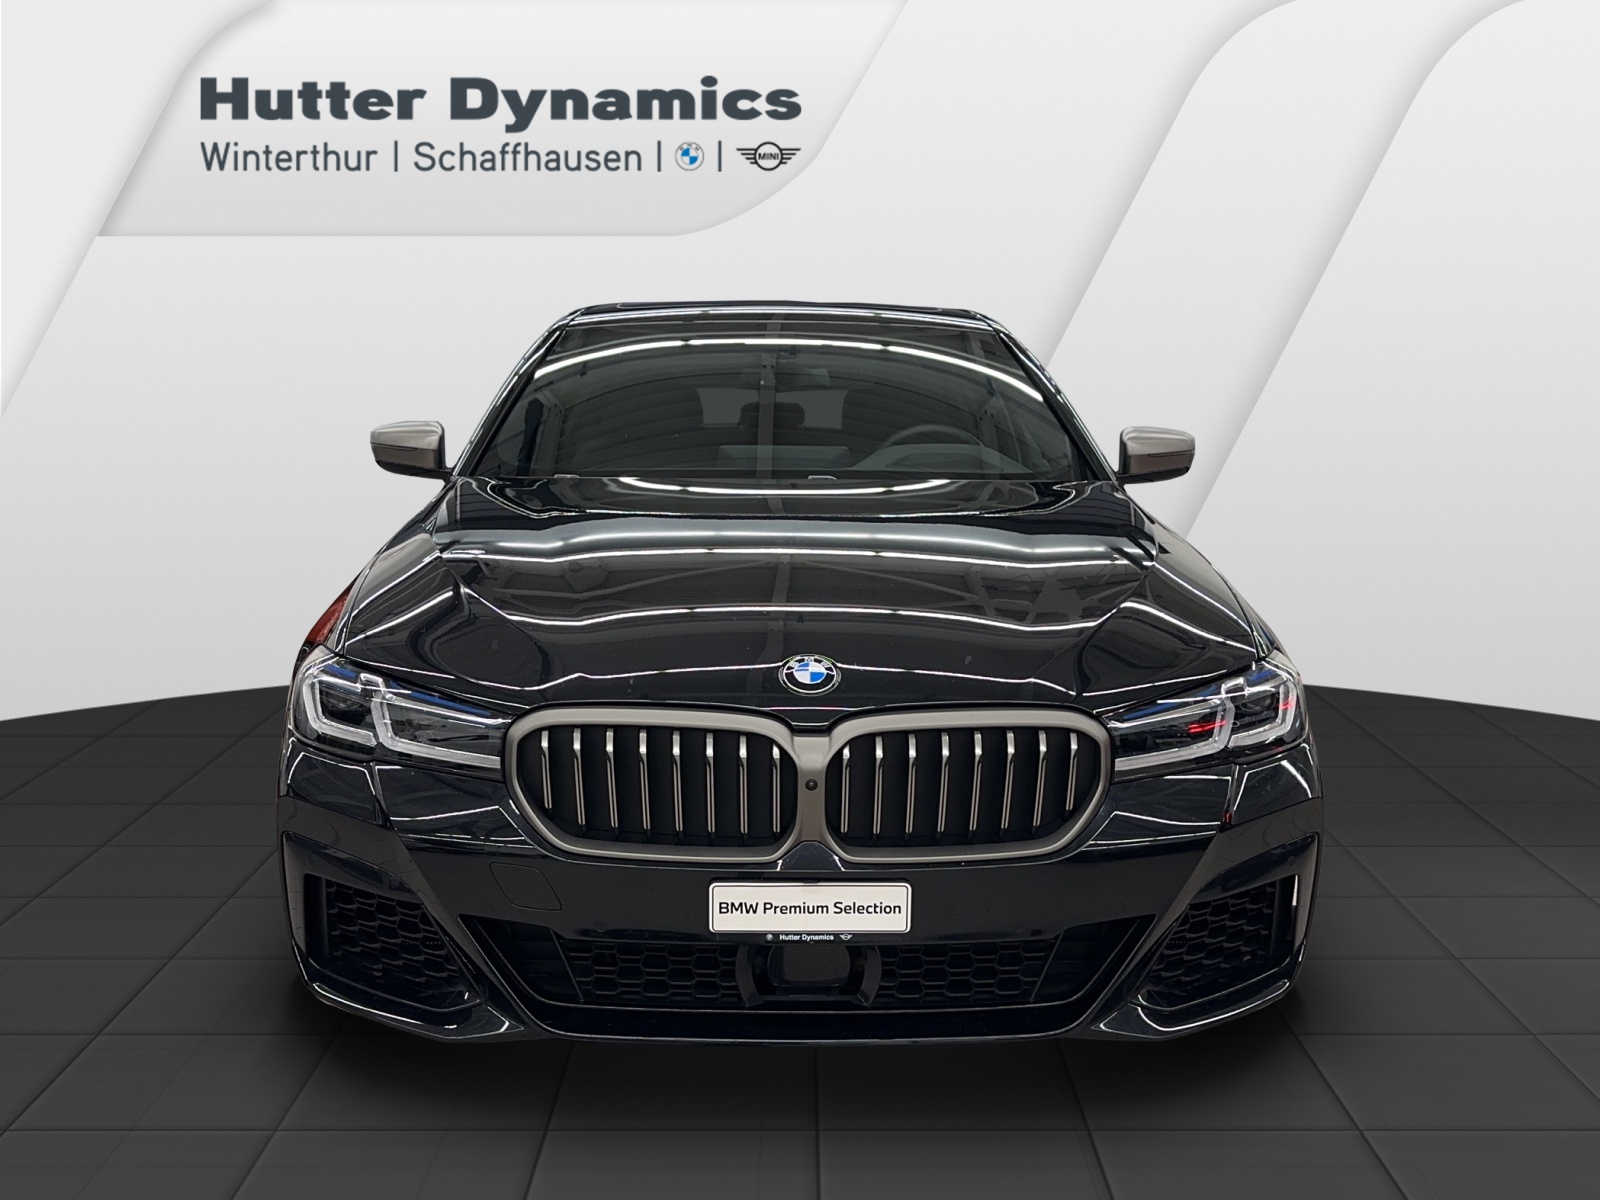 BMW M135i xDrive  Hutter Dynamics AG